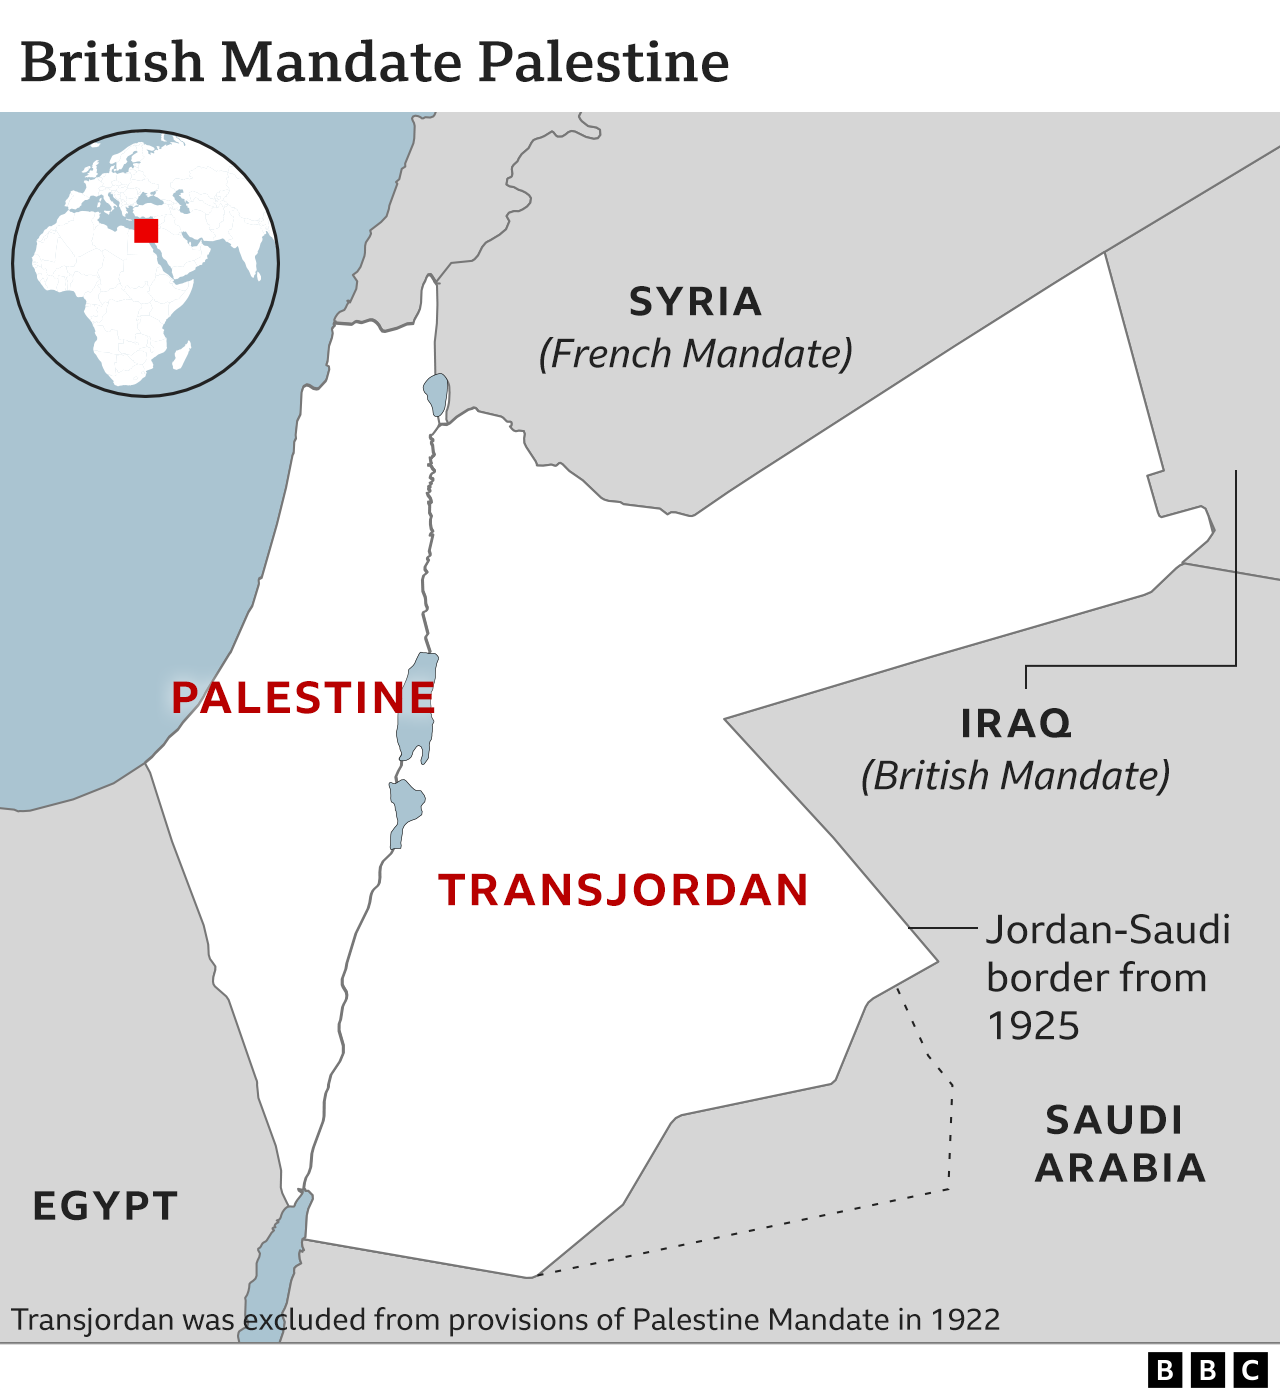 Map showing British Mandate Palestine